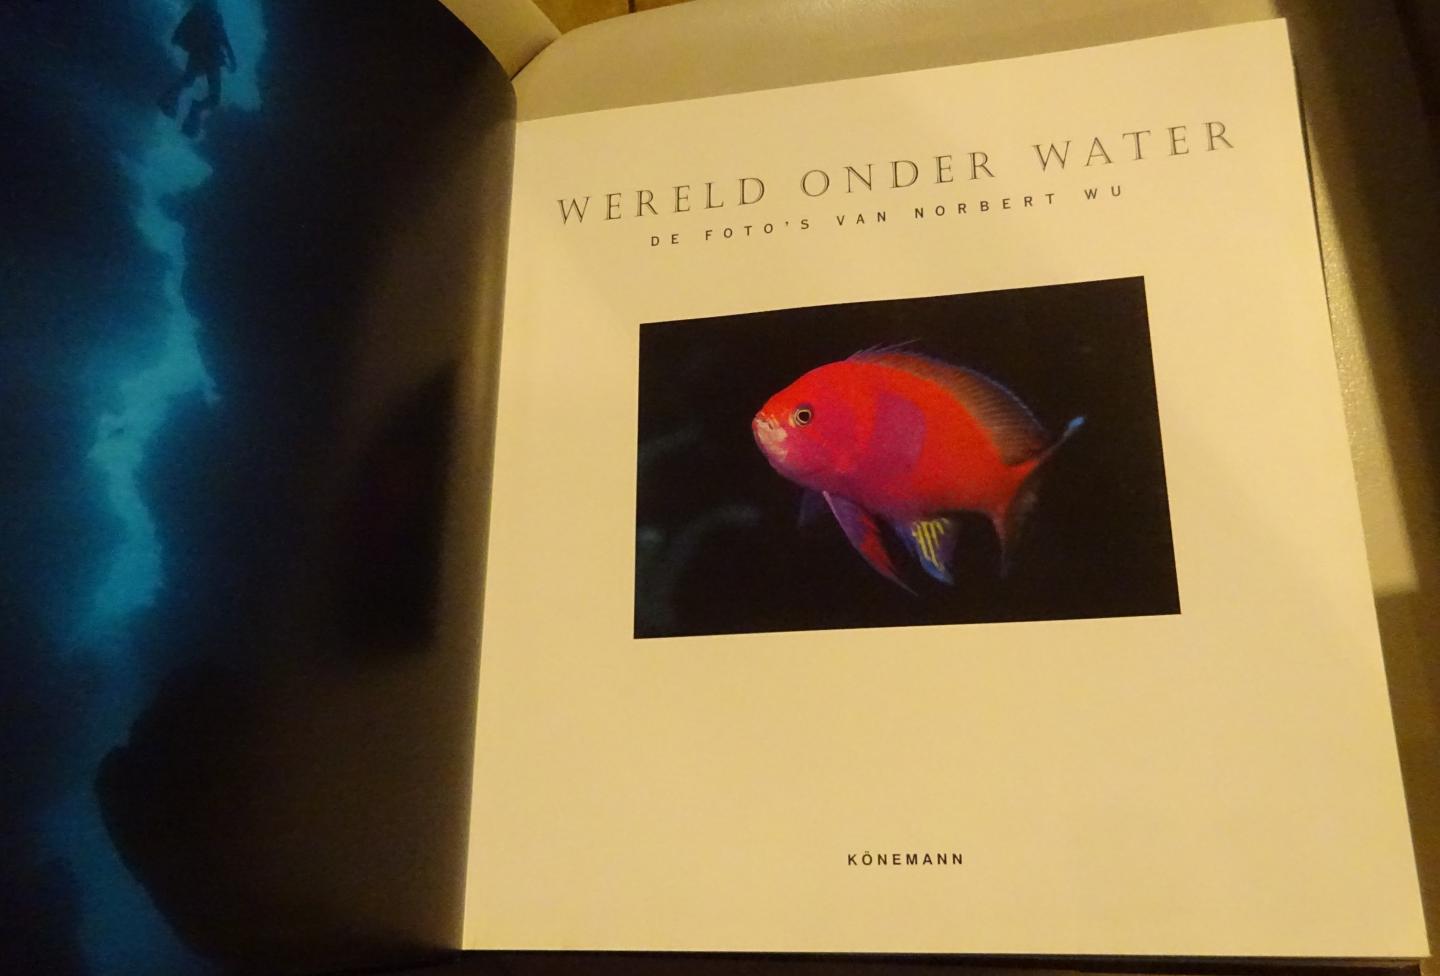 Wu, Norbert - Wereld onder water